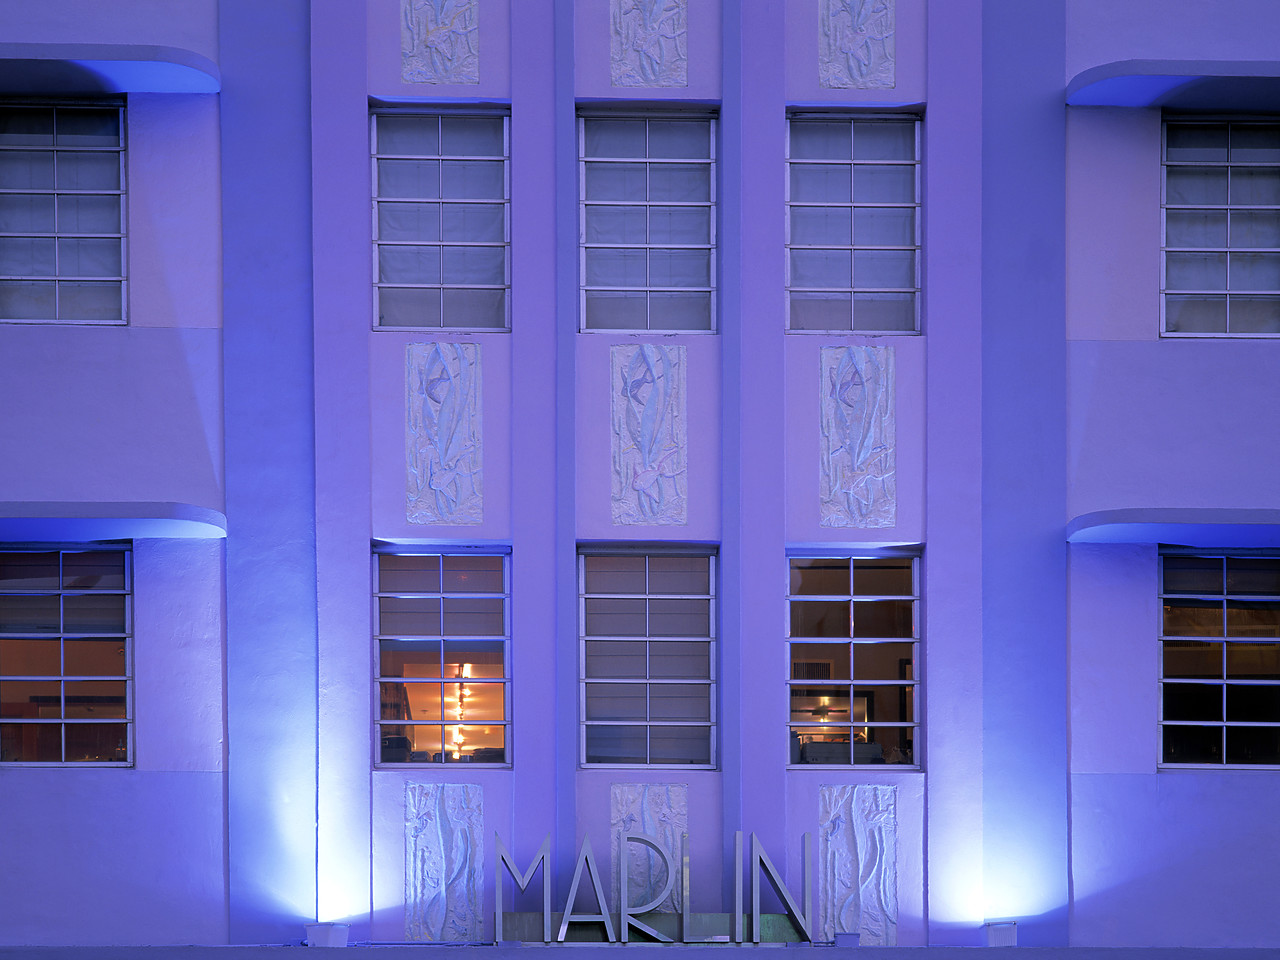 #010188-1 - Art Deco Building, Miami, Florida, USA